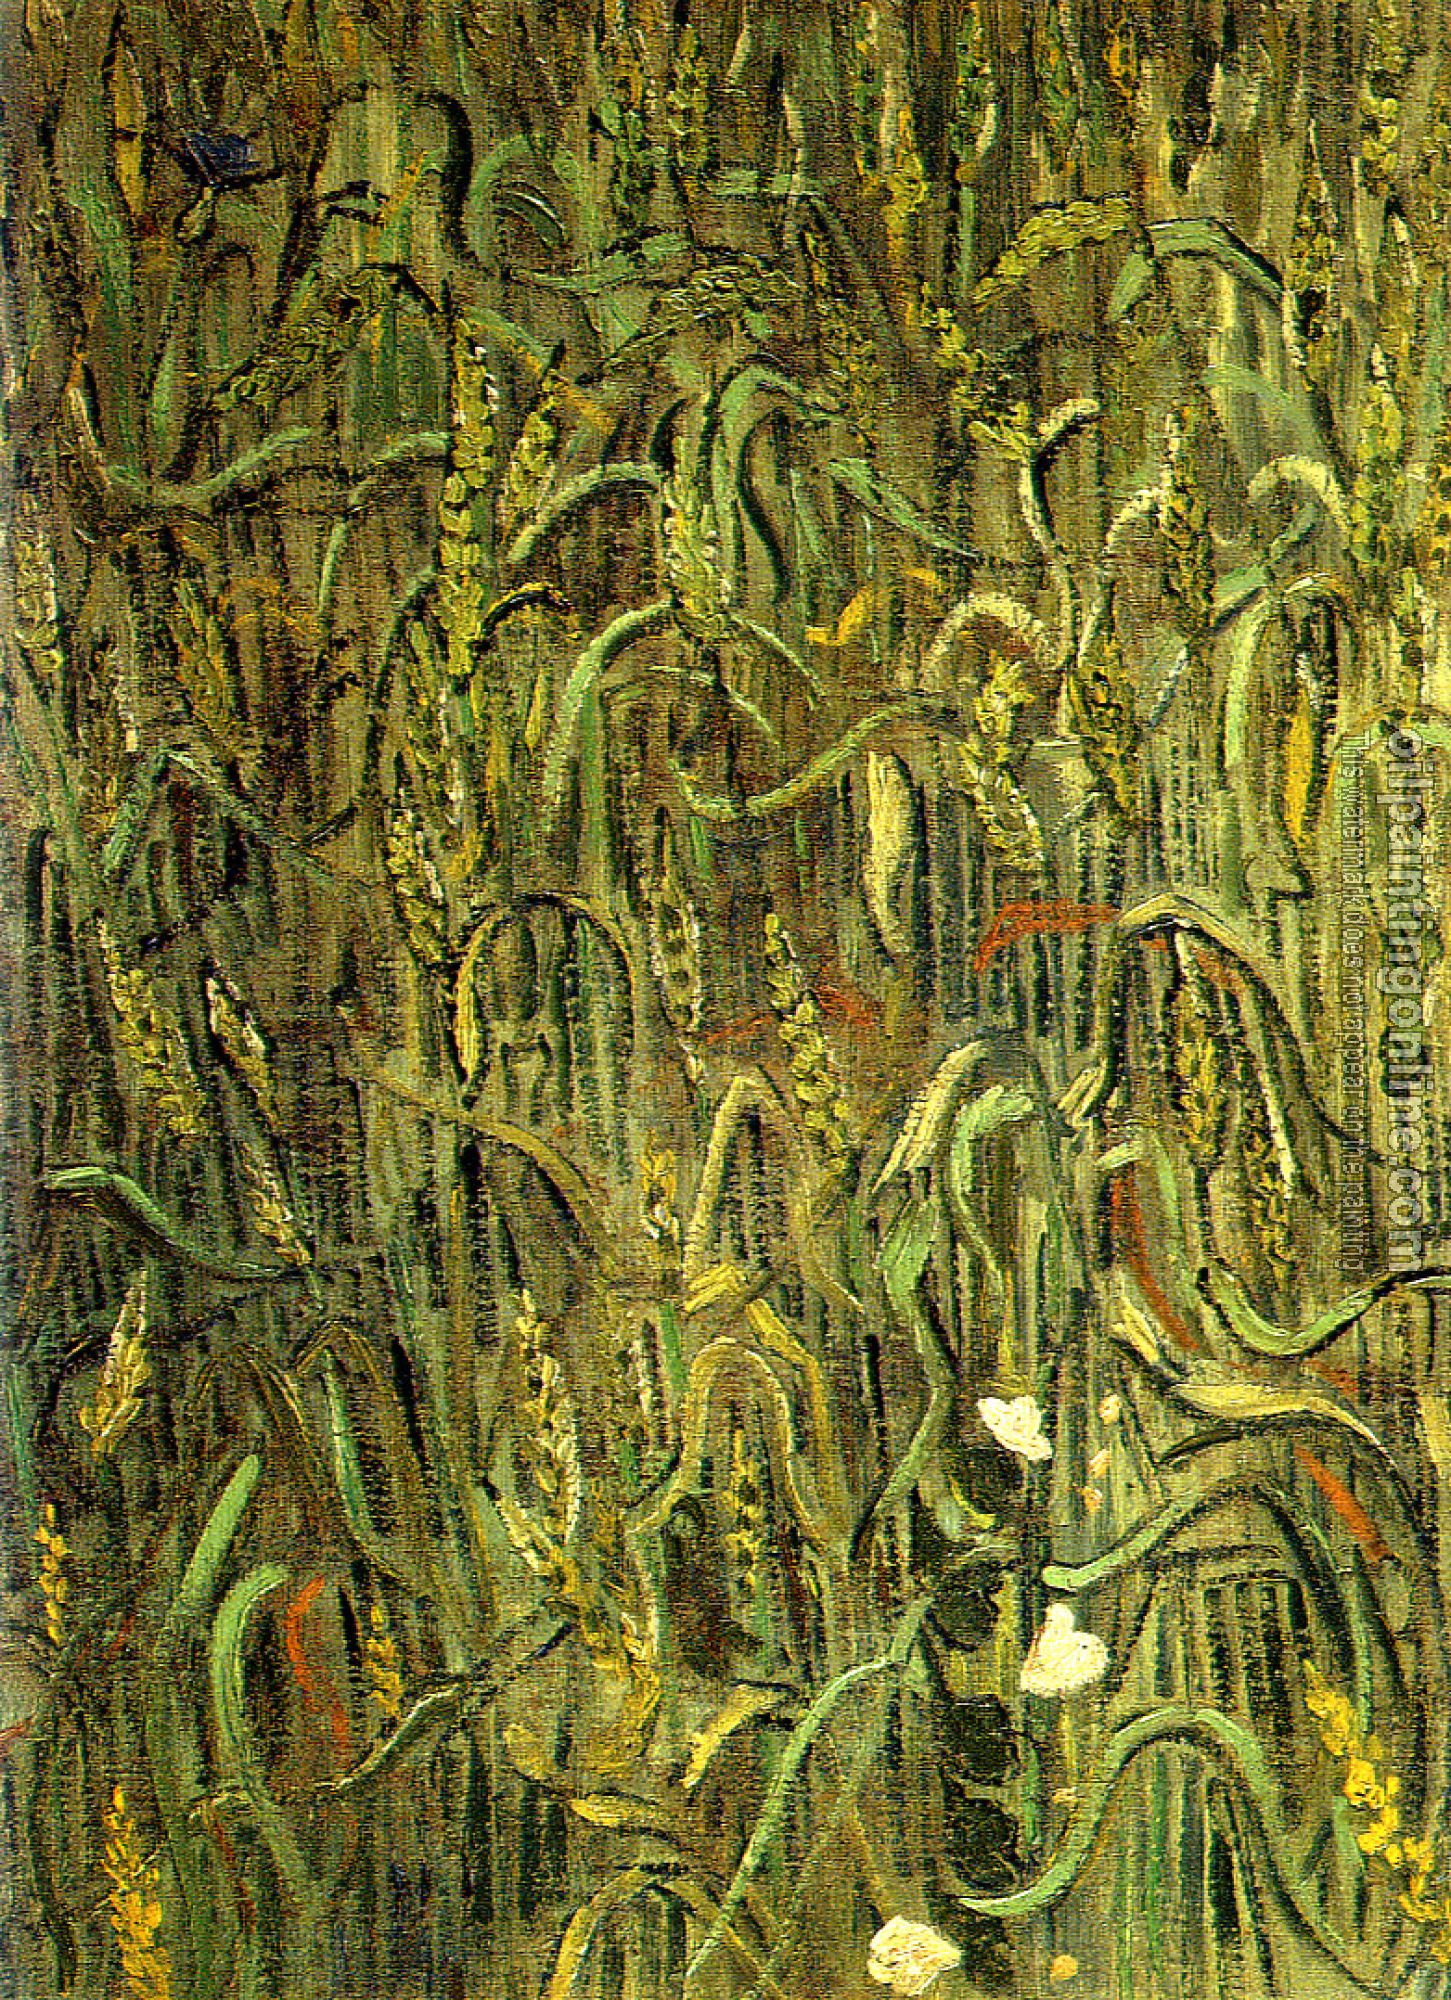 Gogh, Vincent van - Ears of Wheat